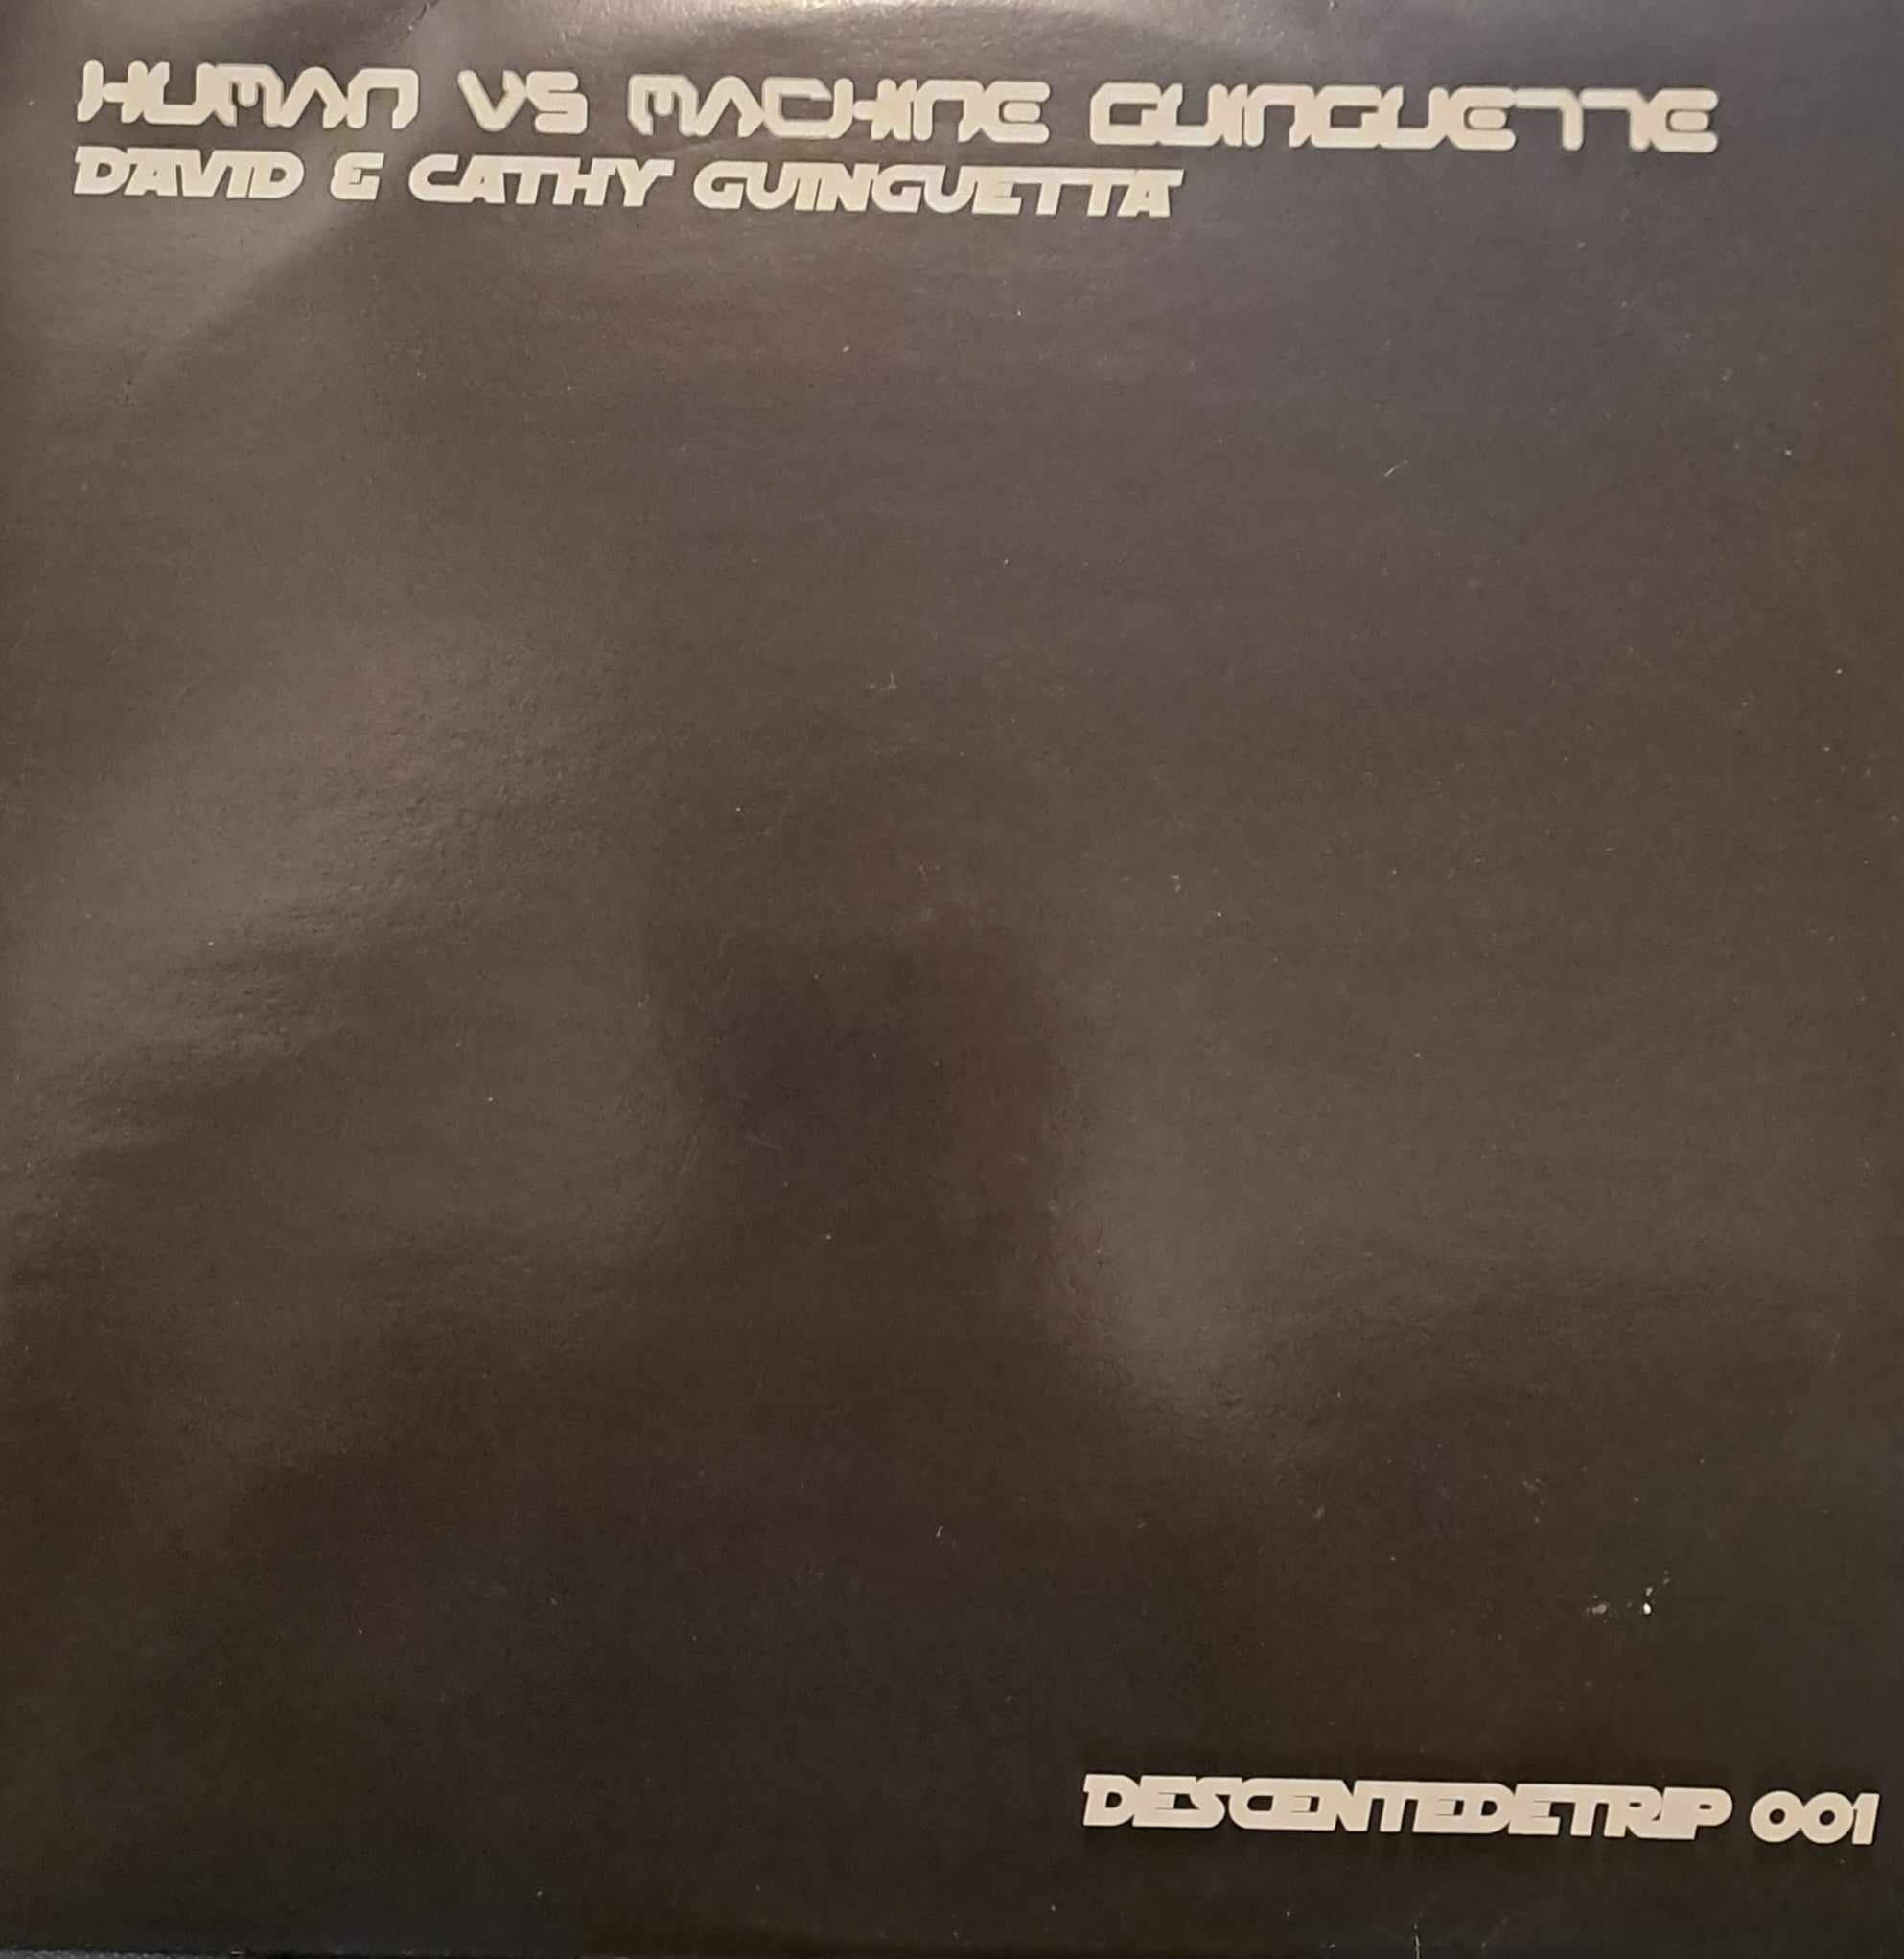 Descente De Trip 01 - vinyle hardcore